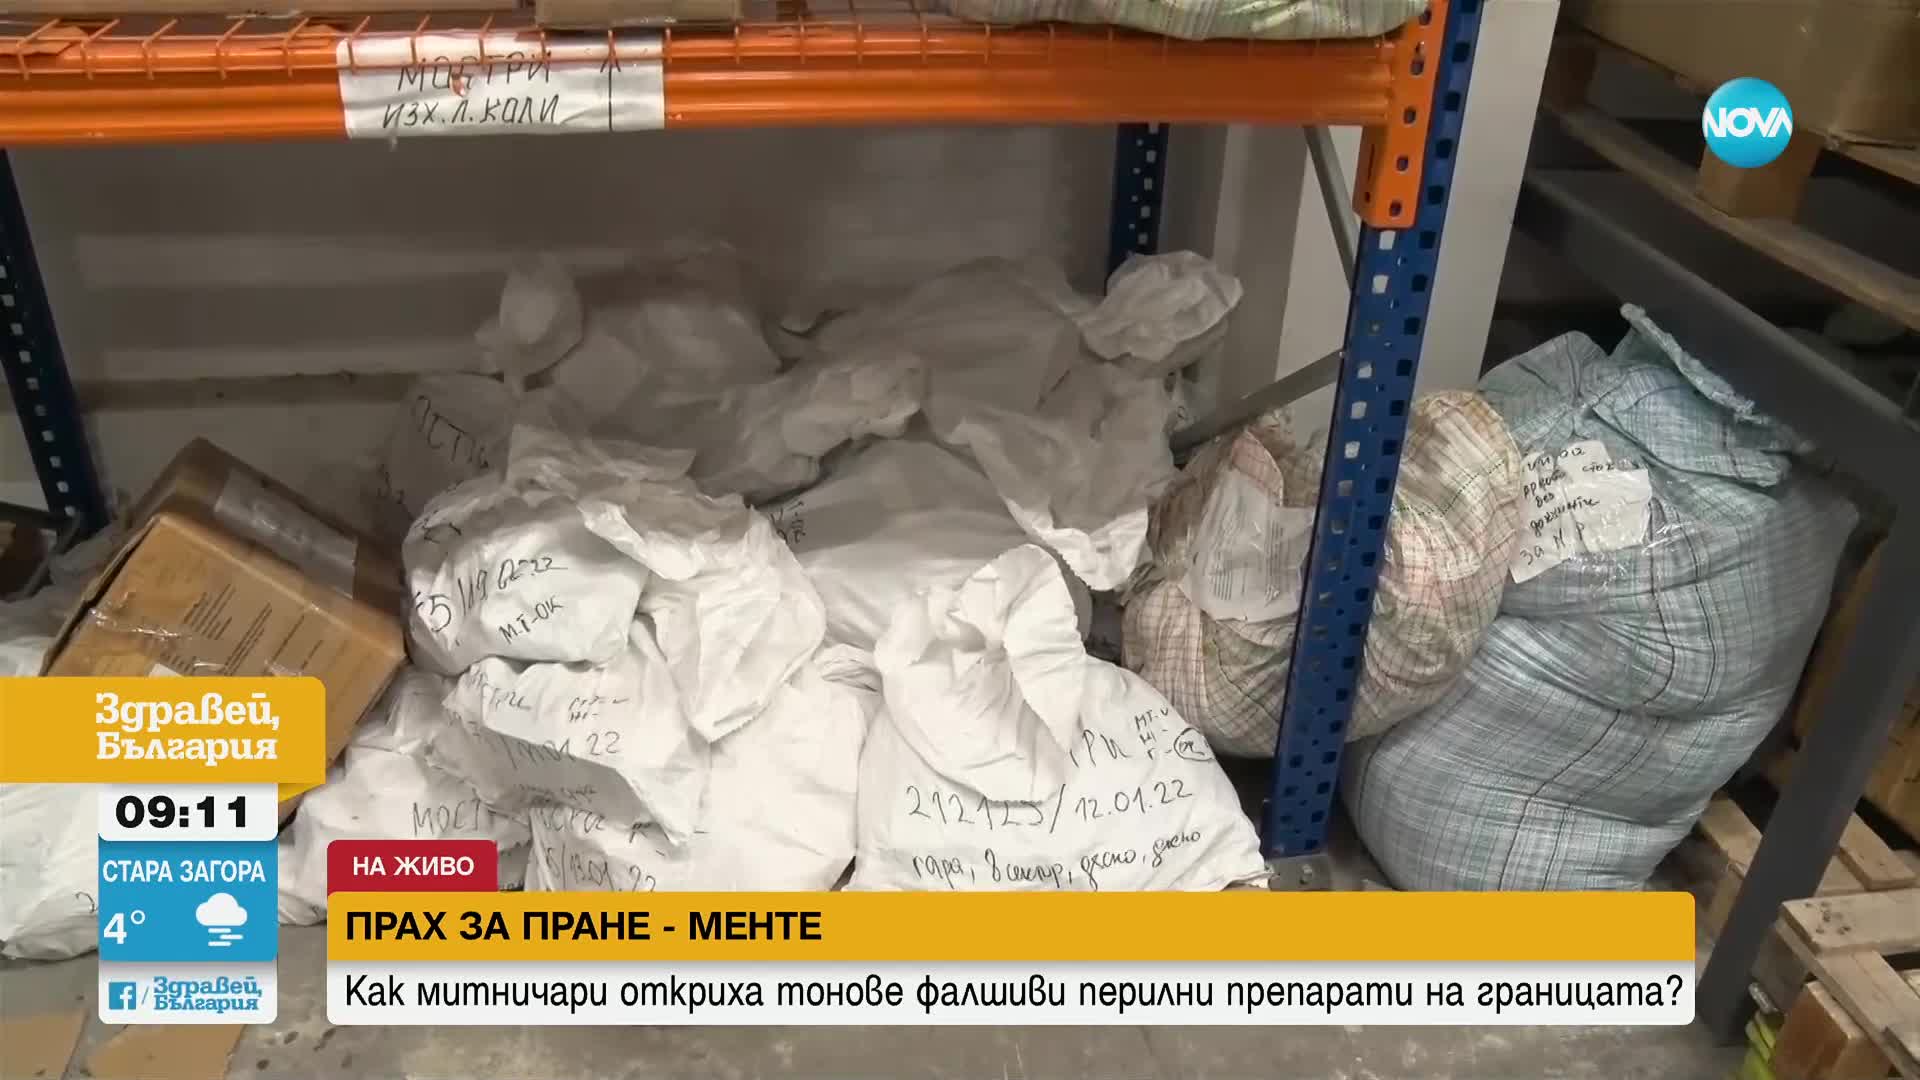 Заловиха над 22 тона фалшив прах за пране на „Капитан Андреево”